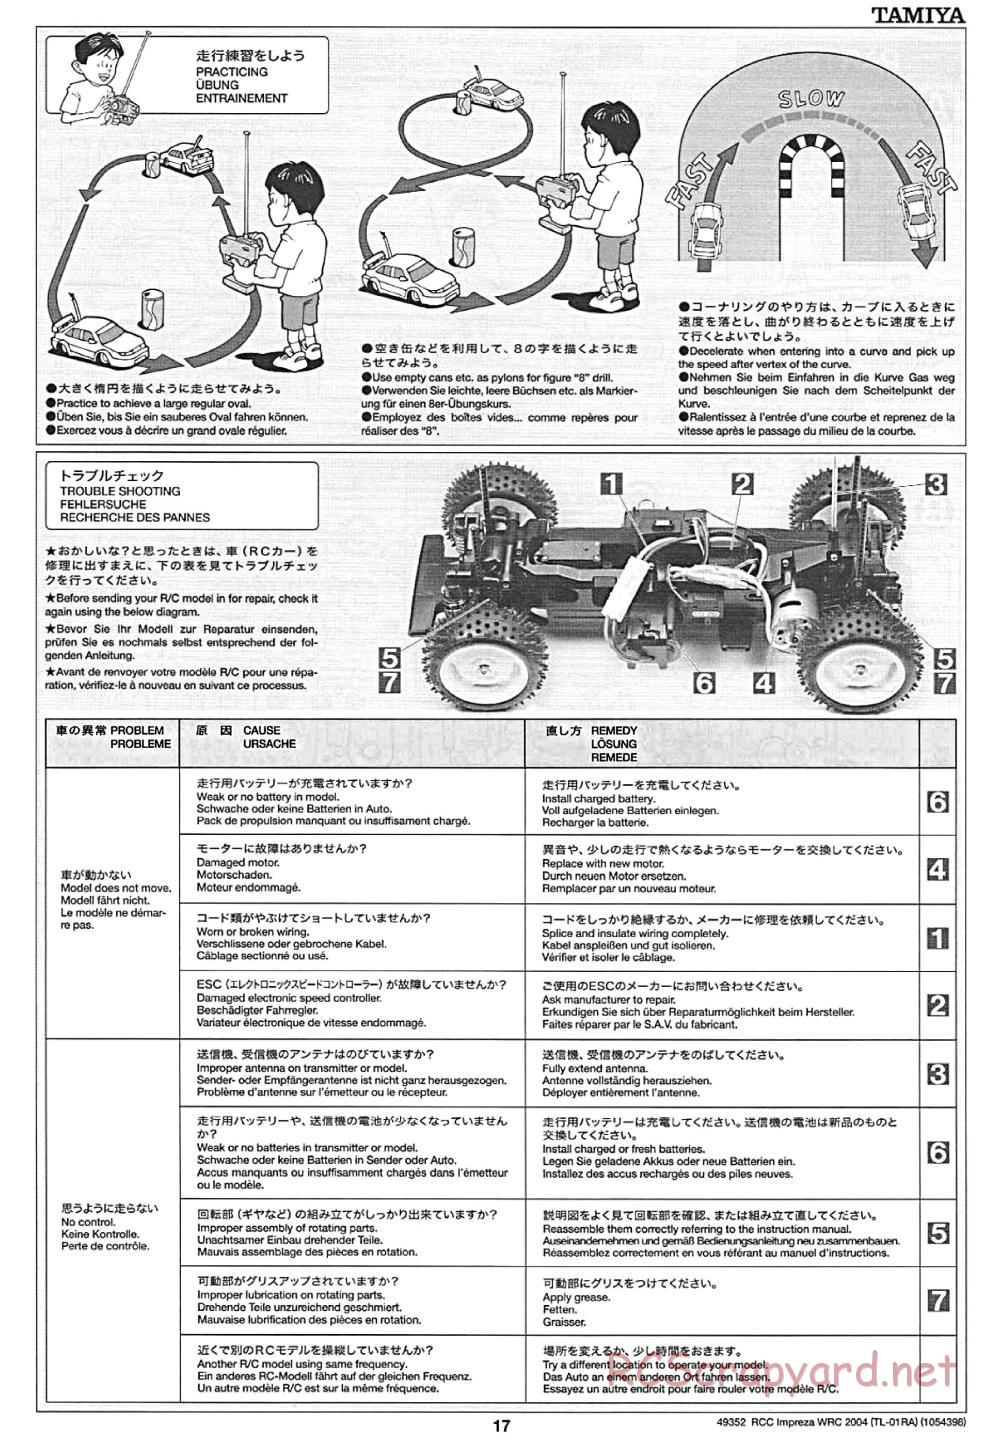 Tamiya - Subaru Impreza WRC 2004 Chassis - Manual - Page 17